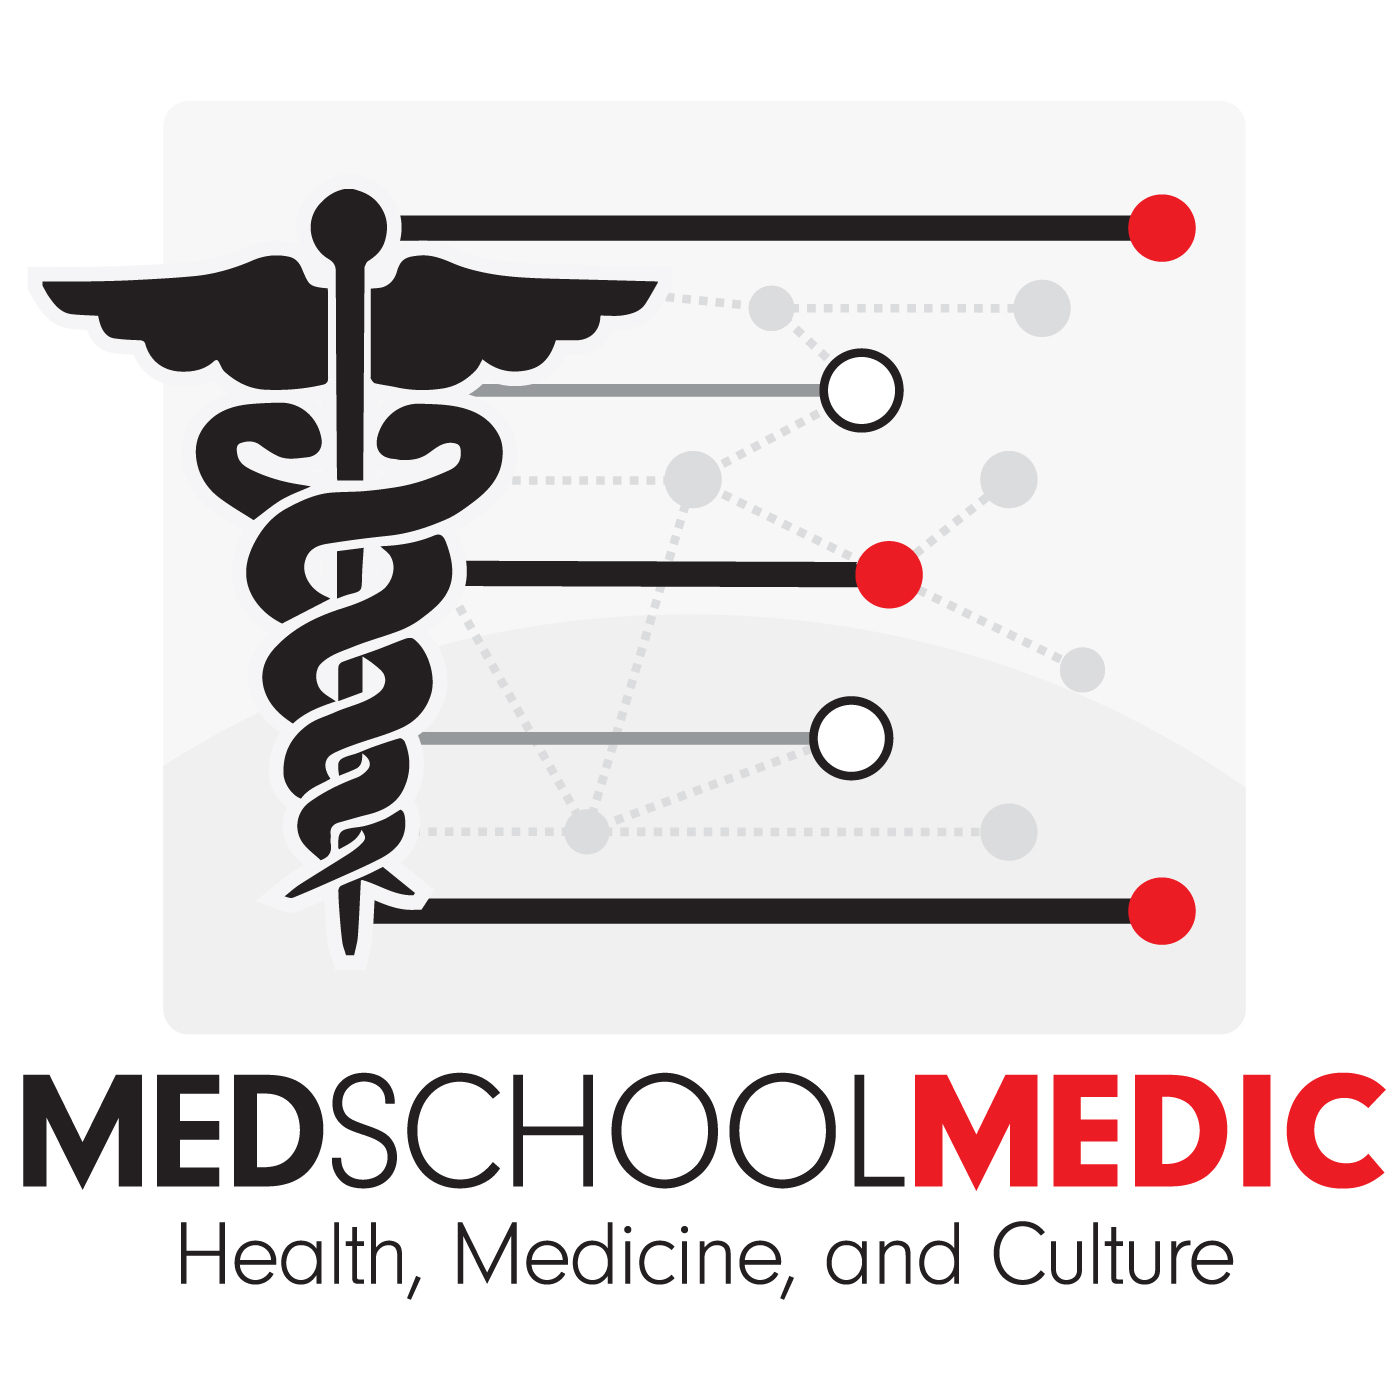 Medschoolmedic